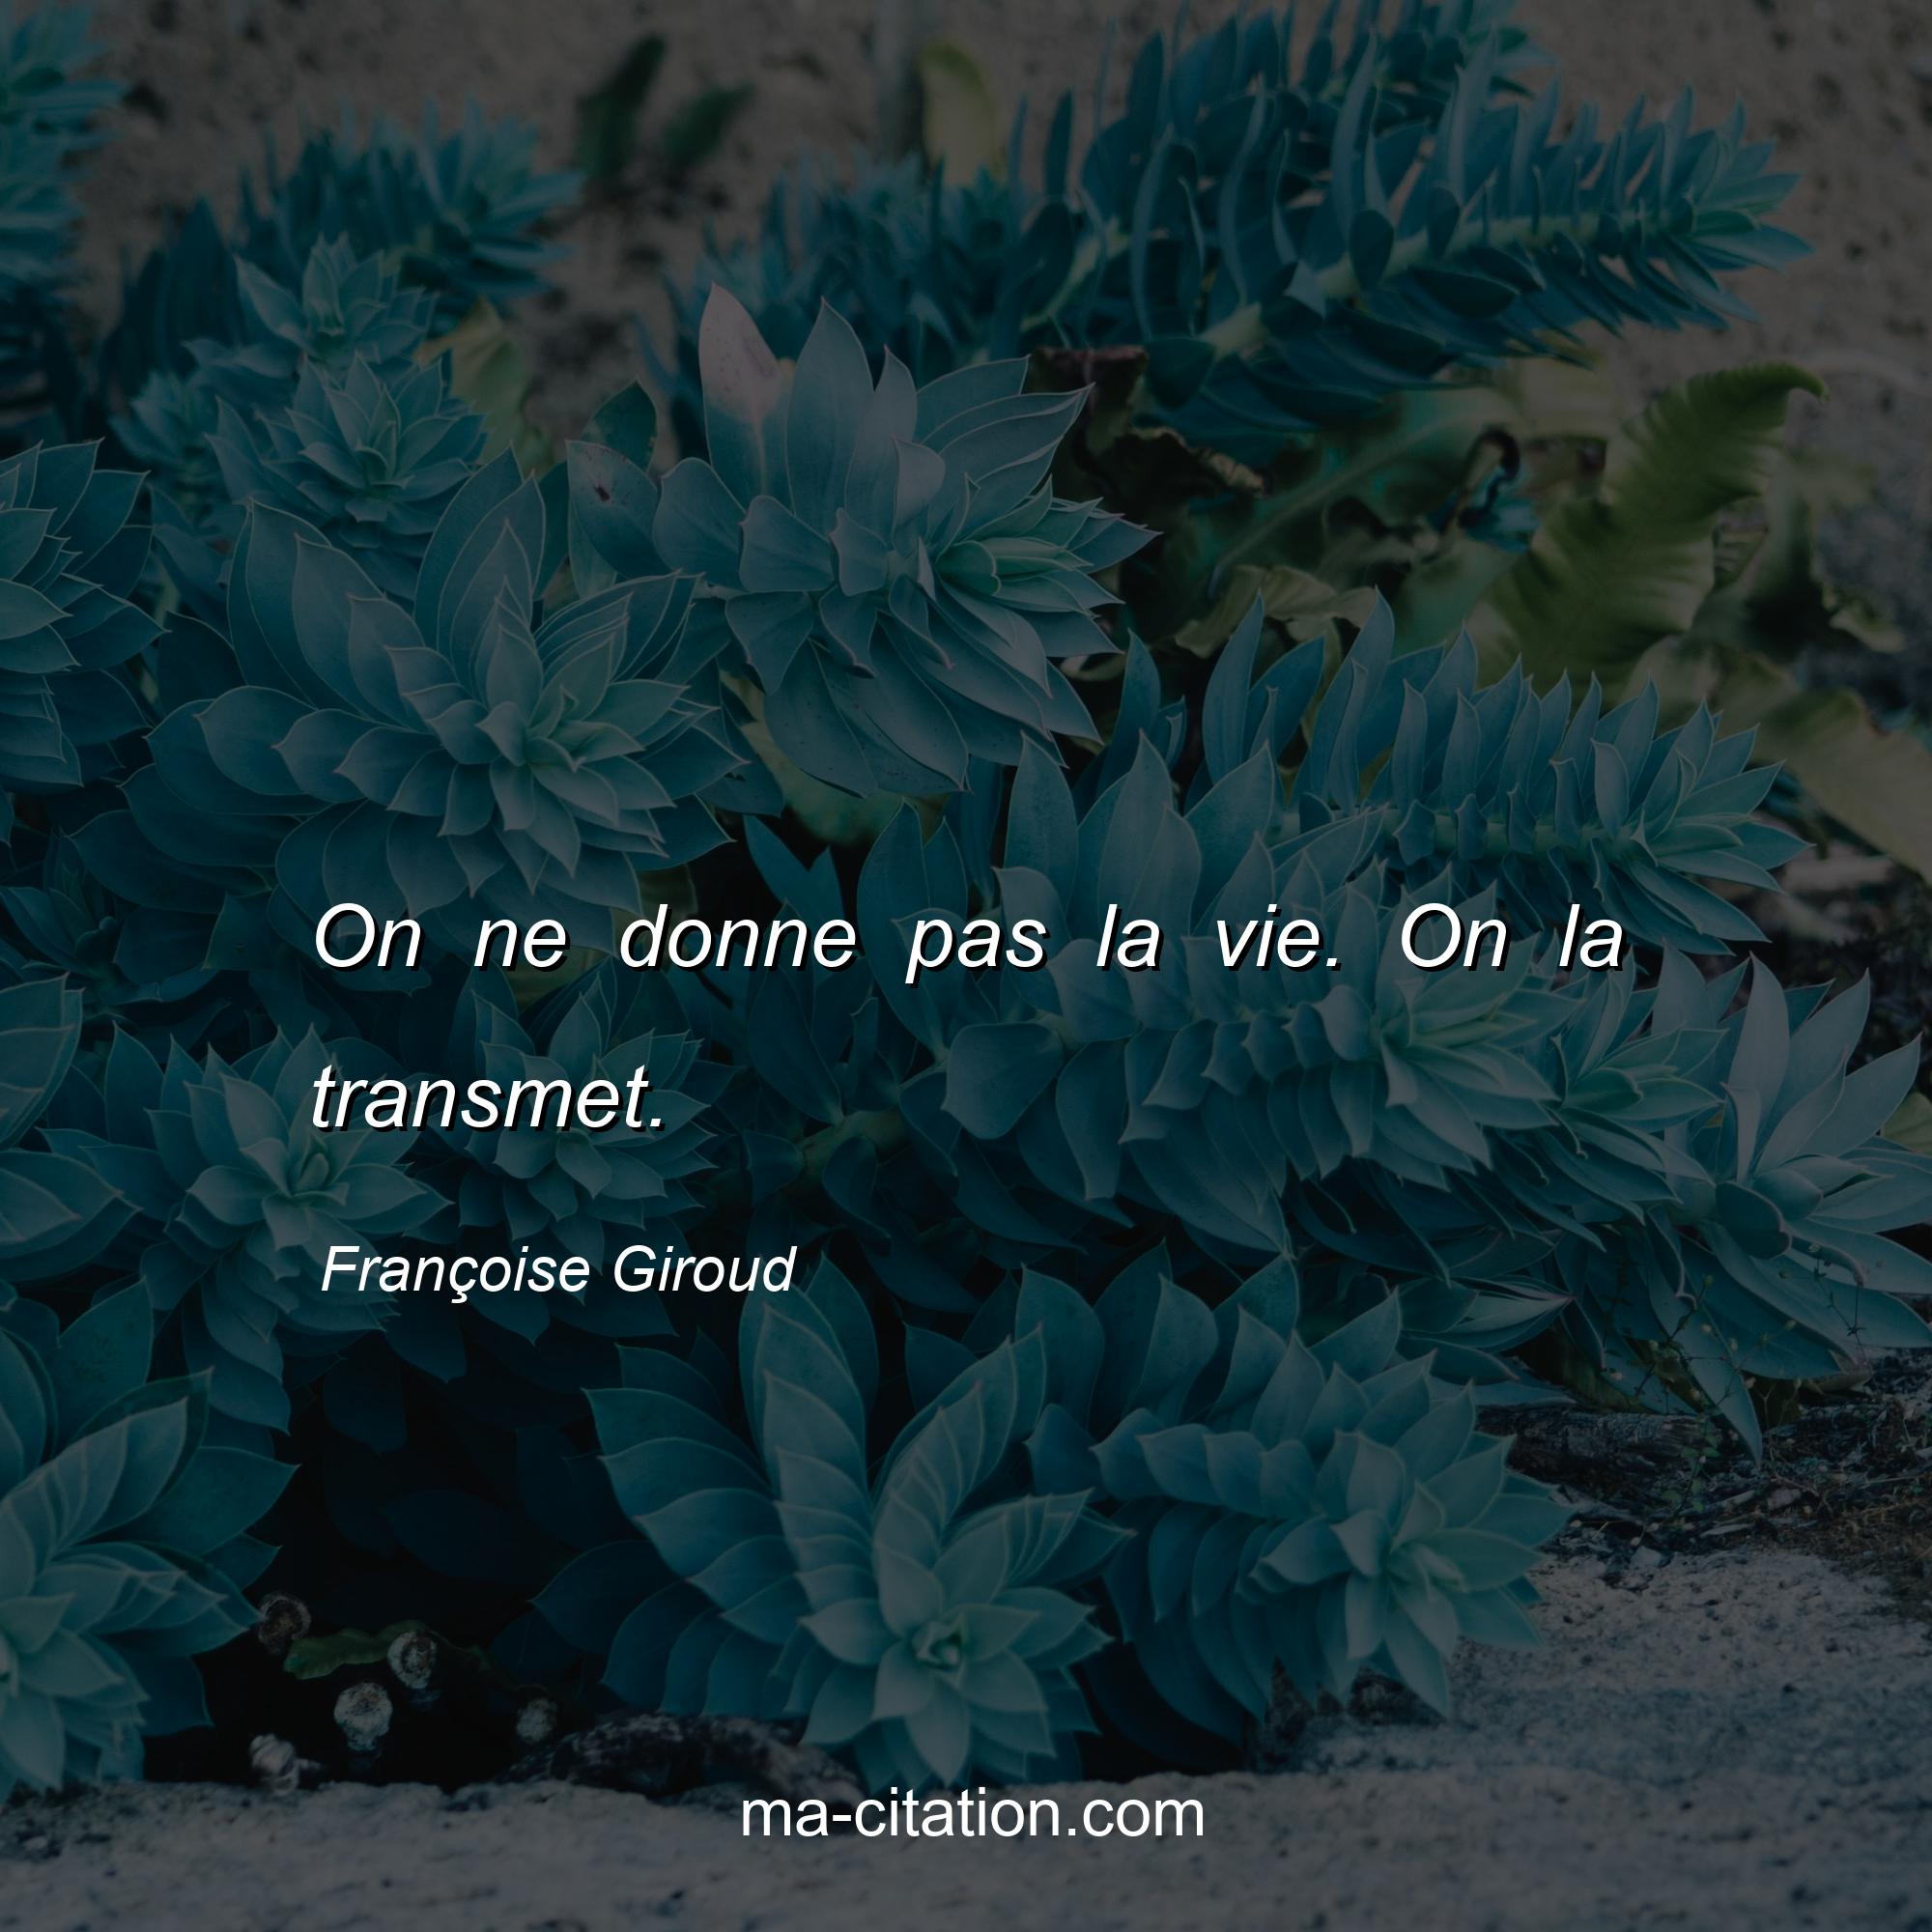 Françoise Giroud : On ne donne pas la vie. On la transmet.